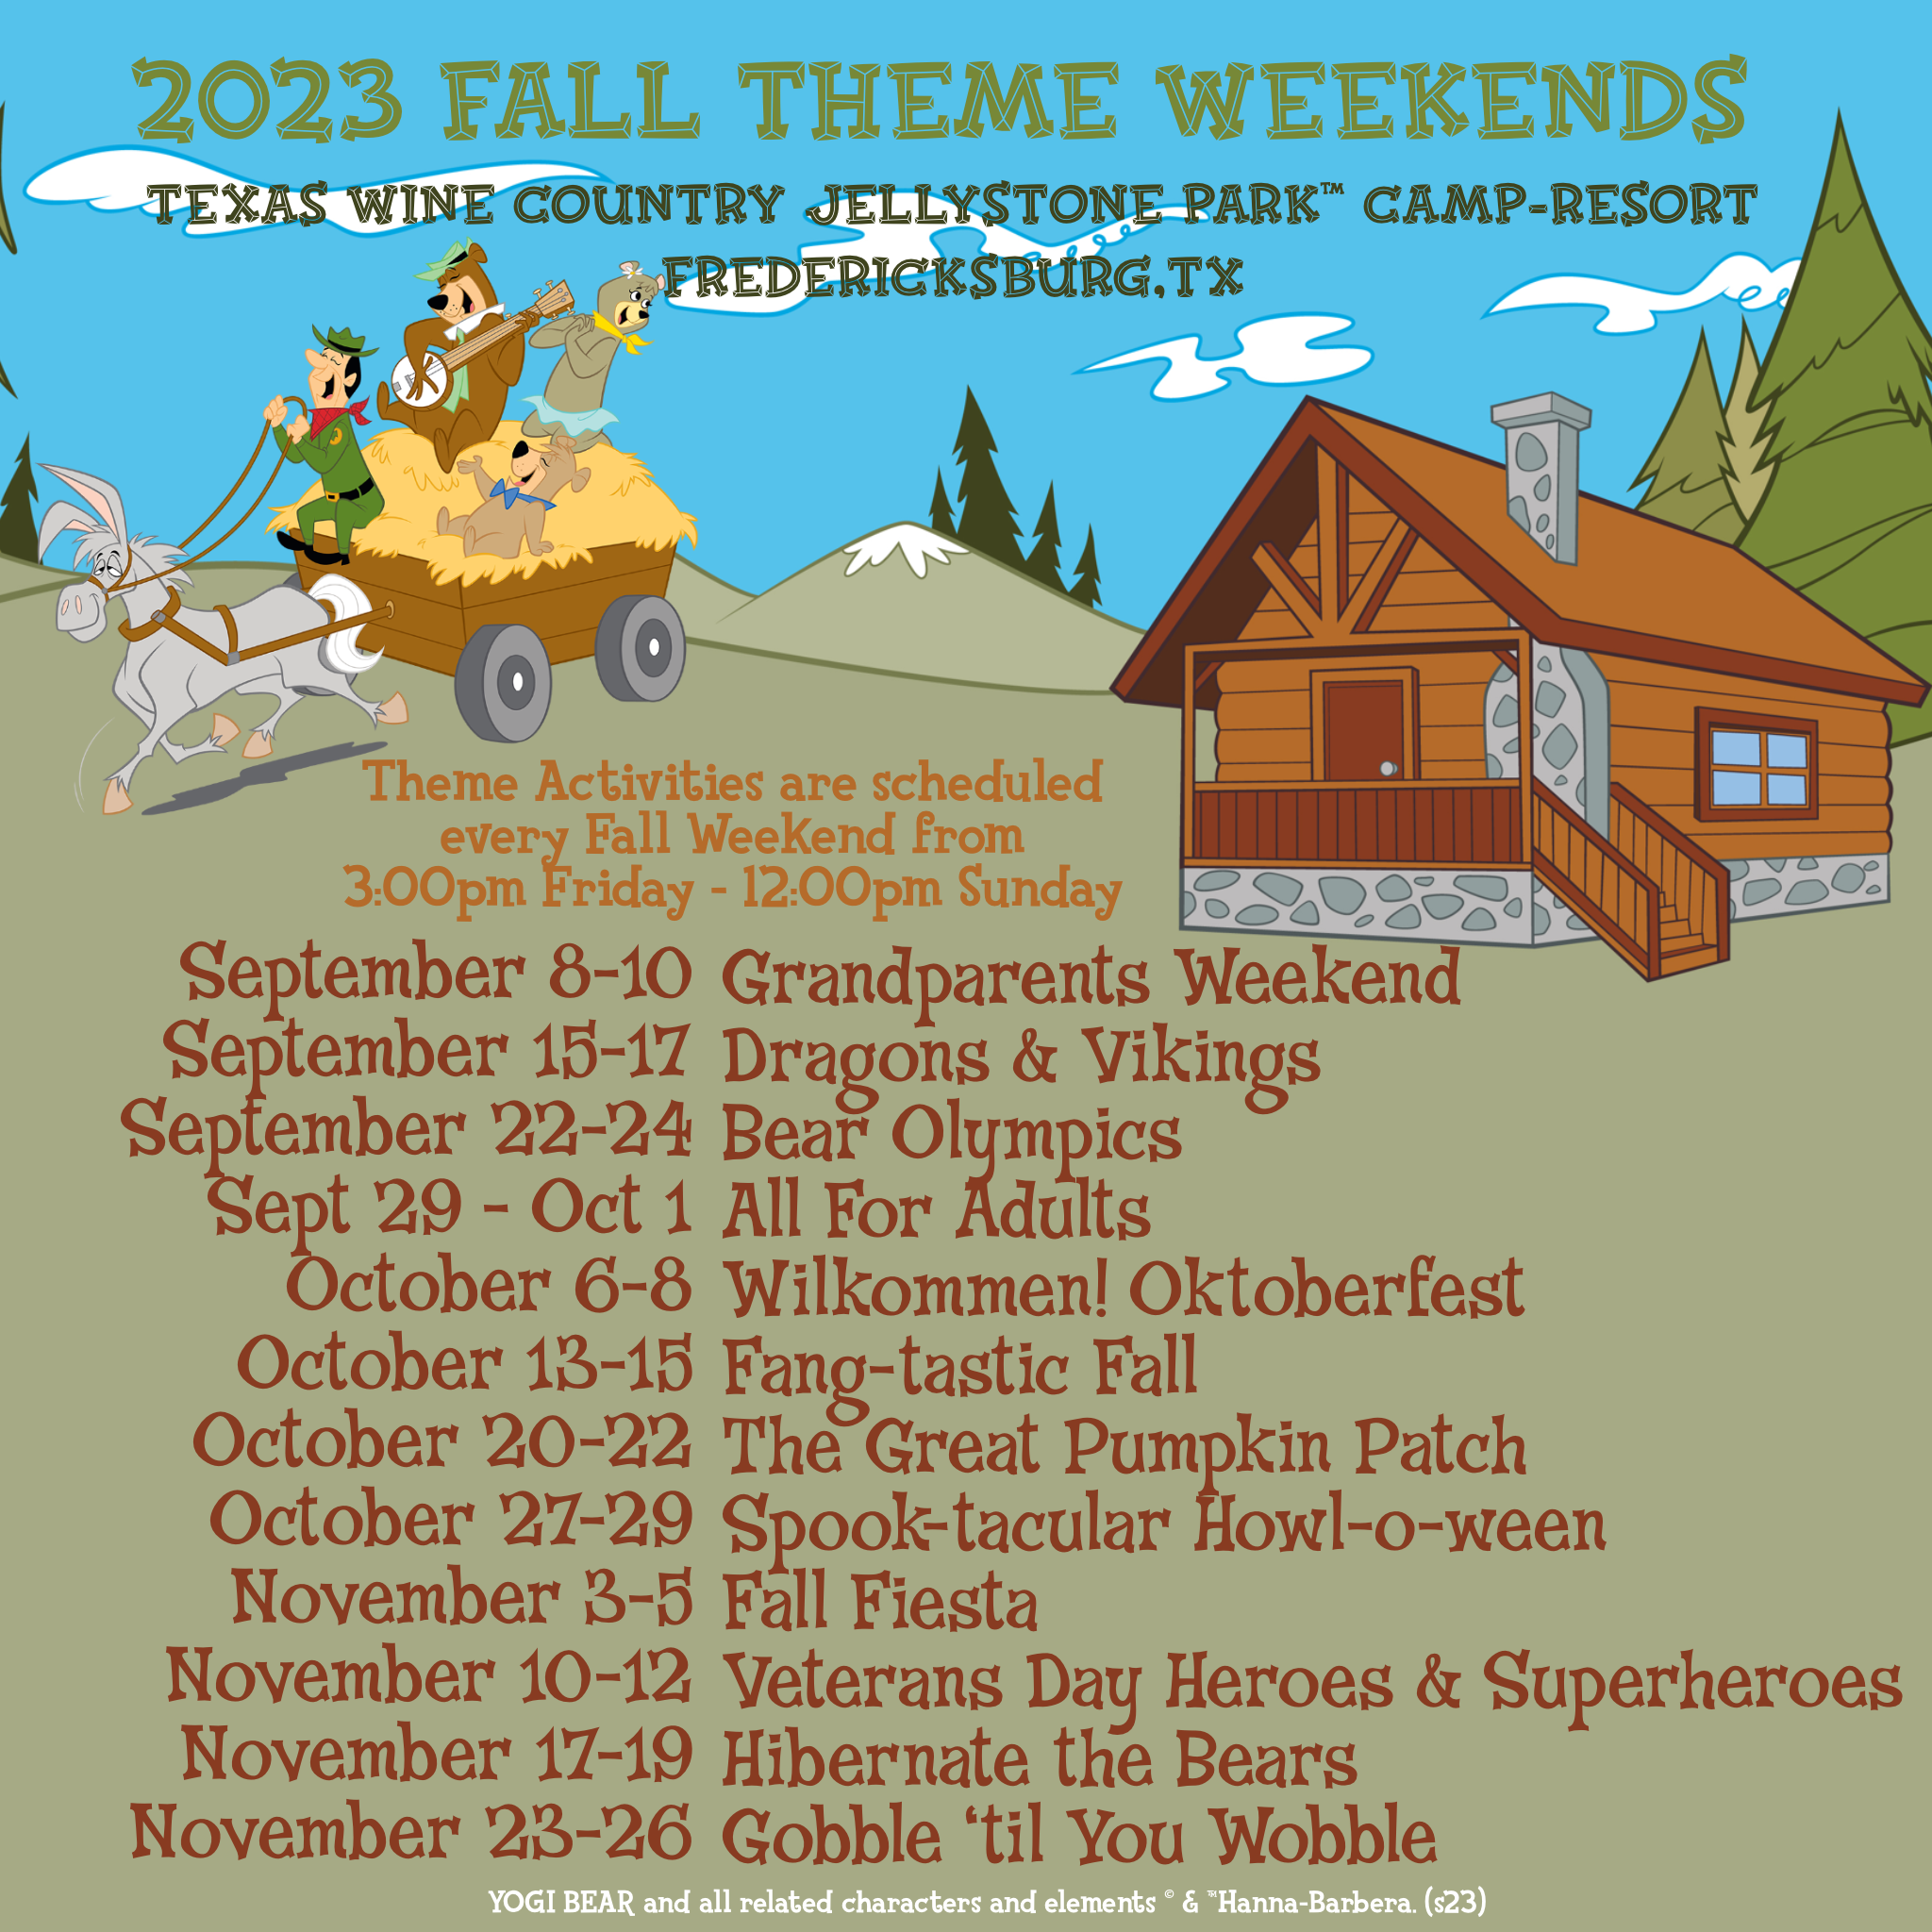 2023 Fall Theme Weekends List